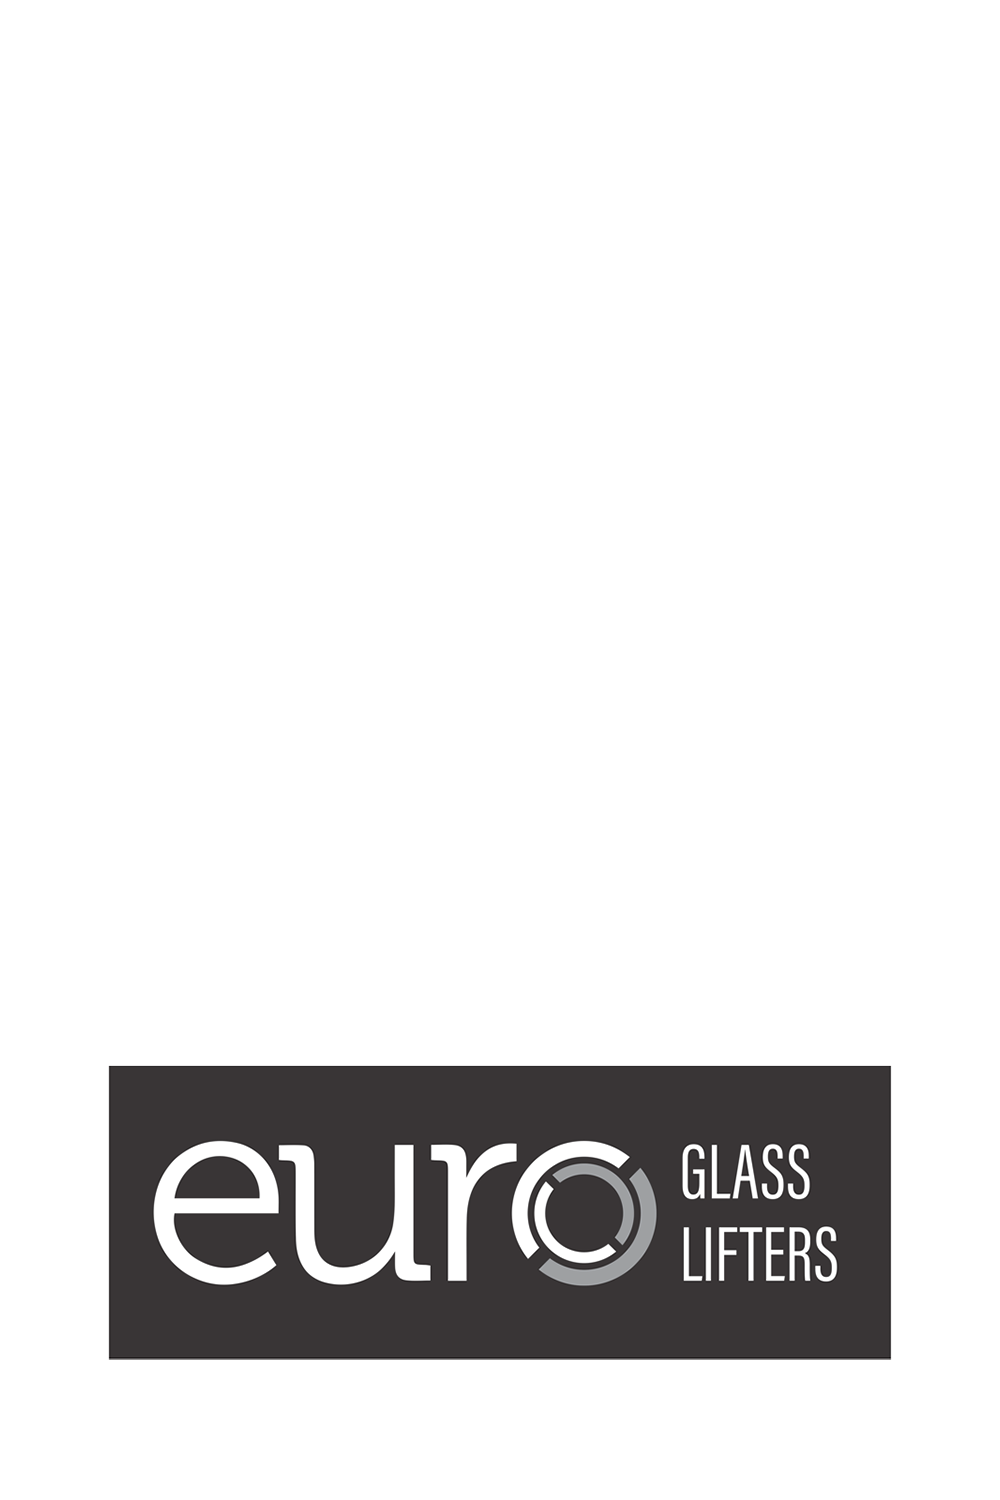 Euro Glass Lifters